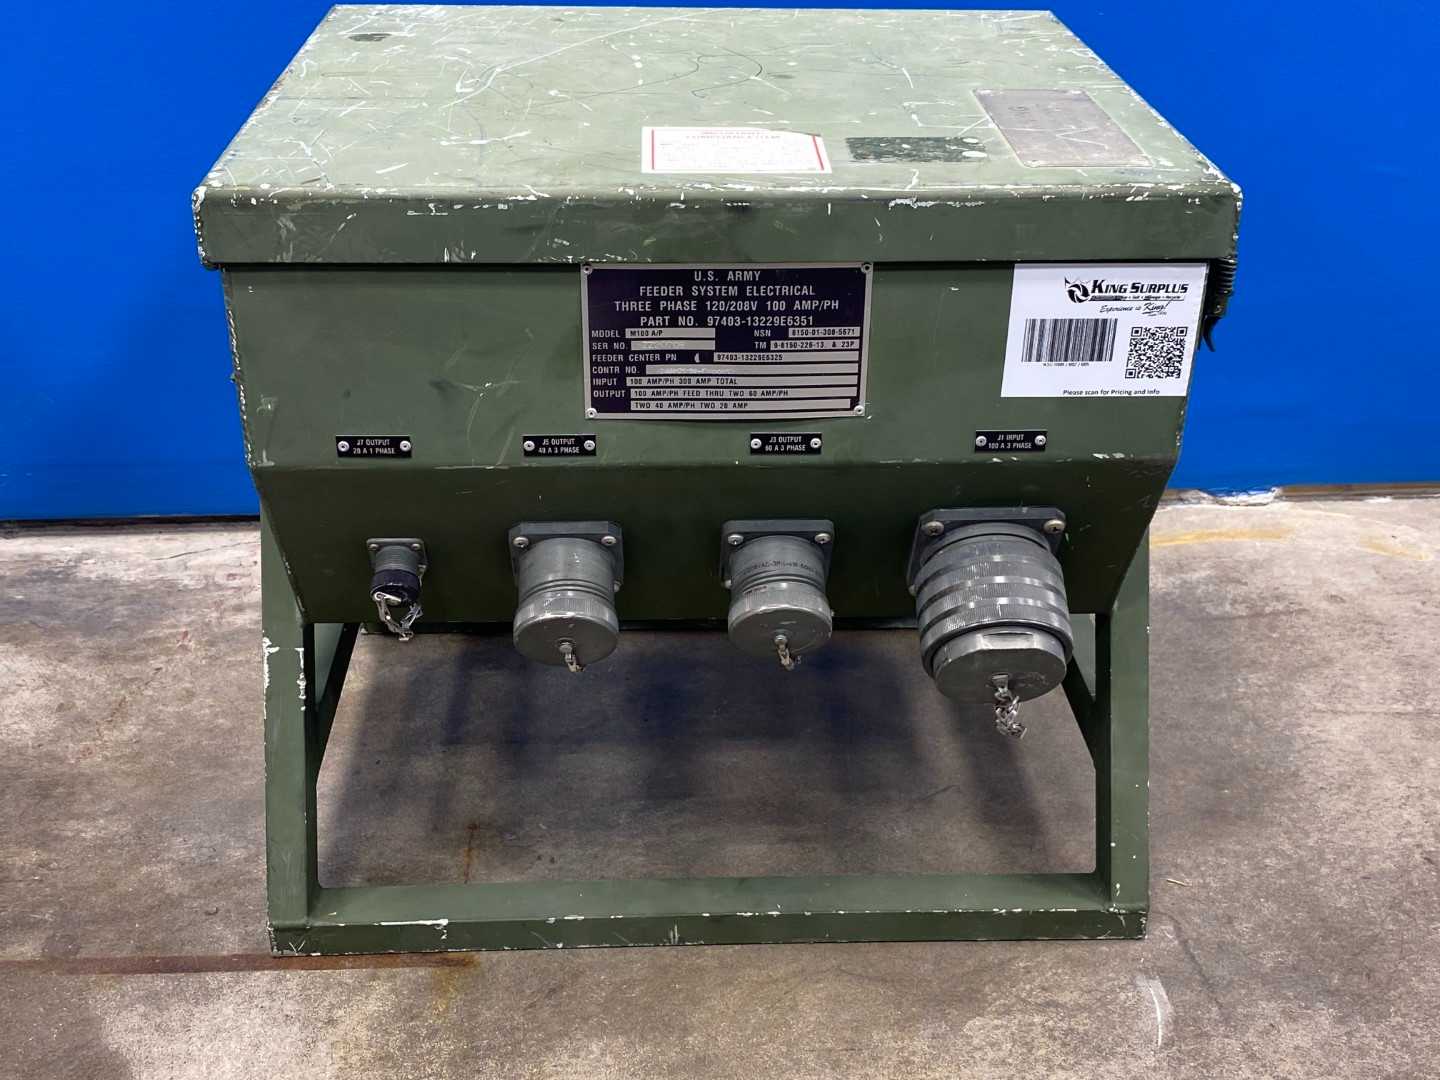 LEX / U.S. Army M100 A/P Feeder System Electrical 97403-13229E6351 PDISE 